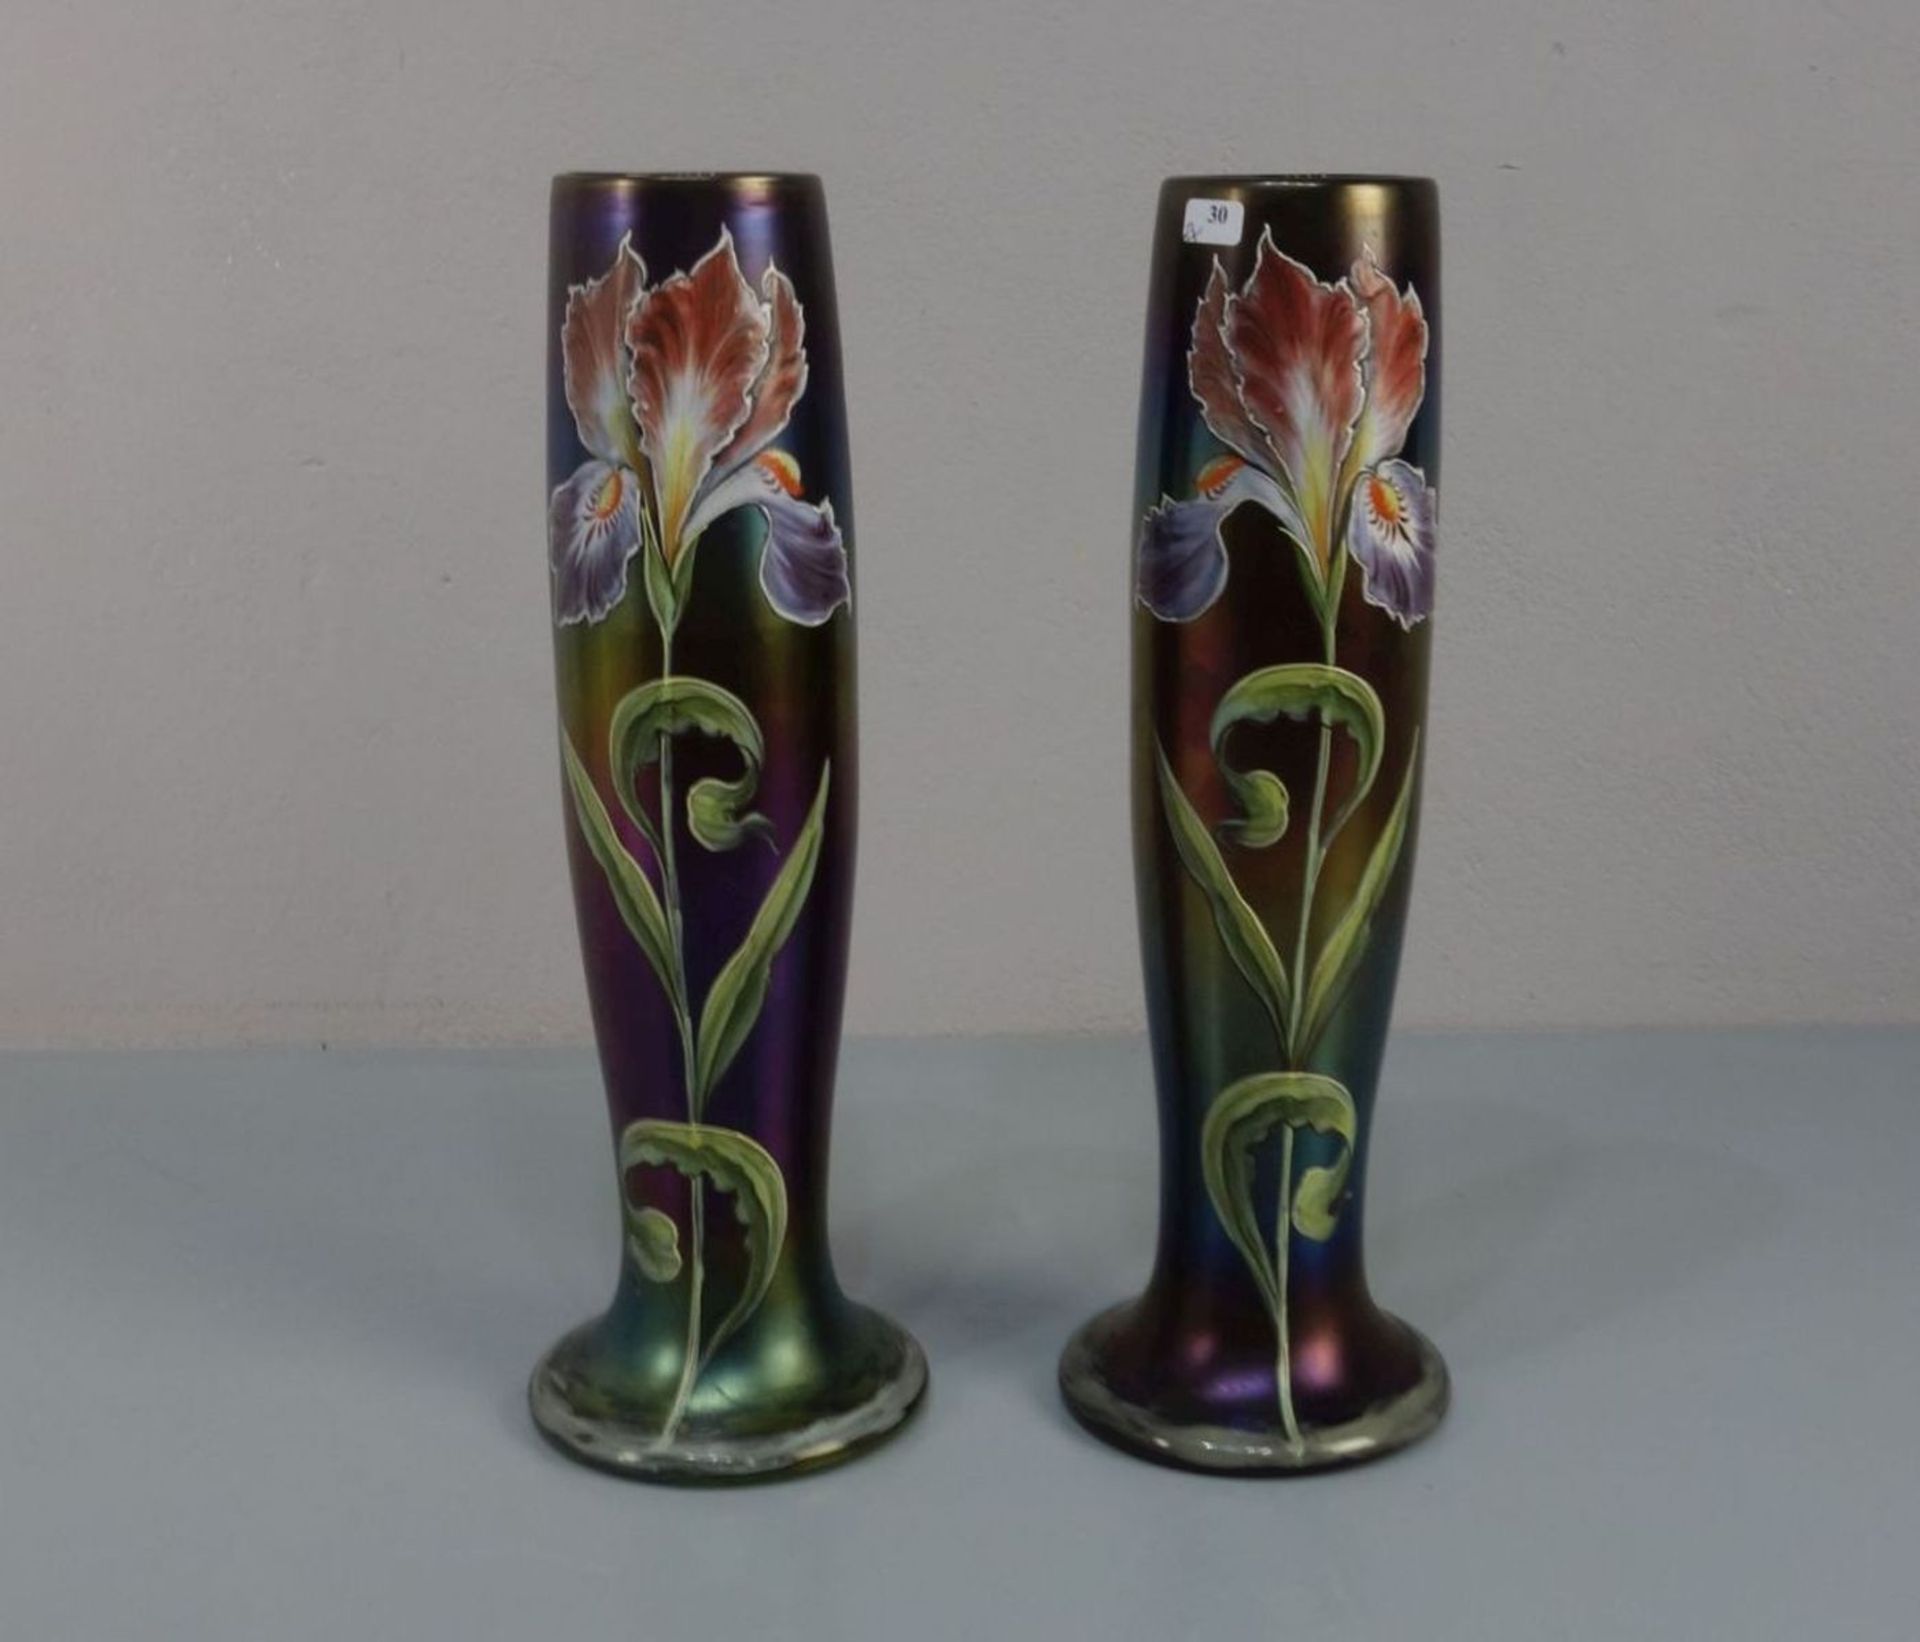 JUGENDSTIL VASENPAAR MIT FLEUR DE LIS - MOTIV / pair of art nouveau vases, Glas, Ferdinand von